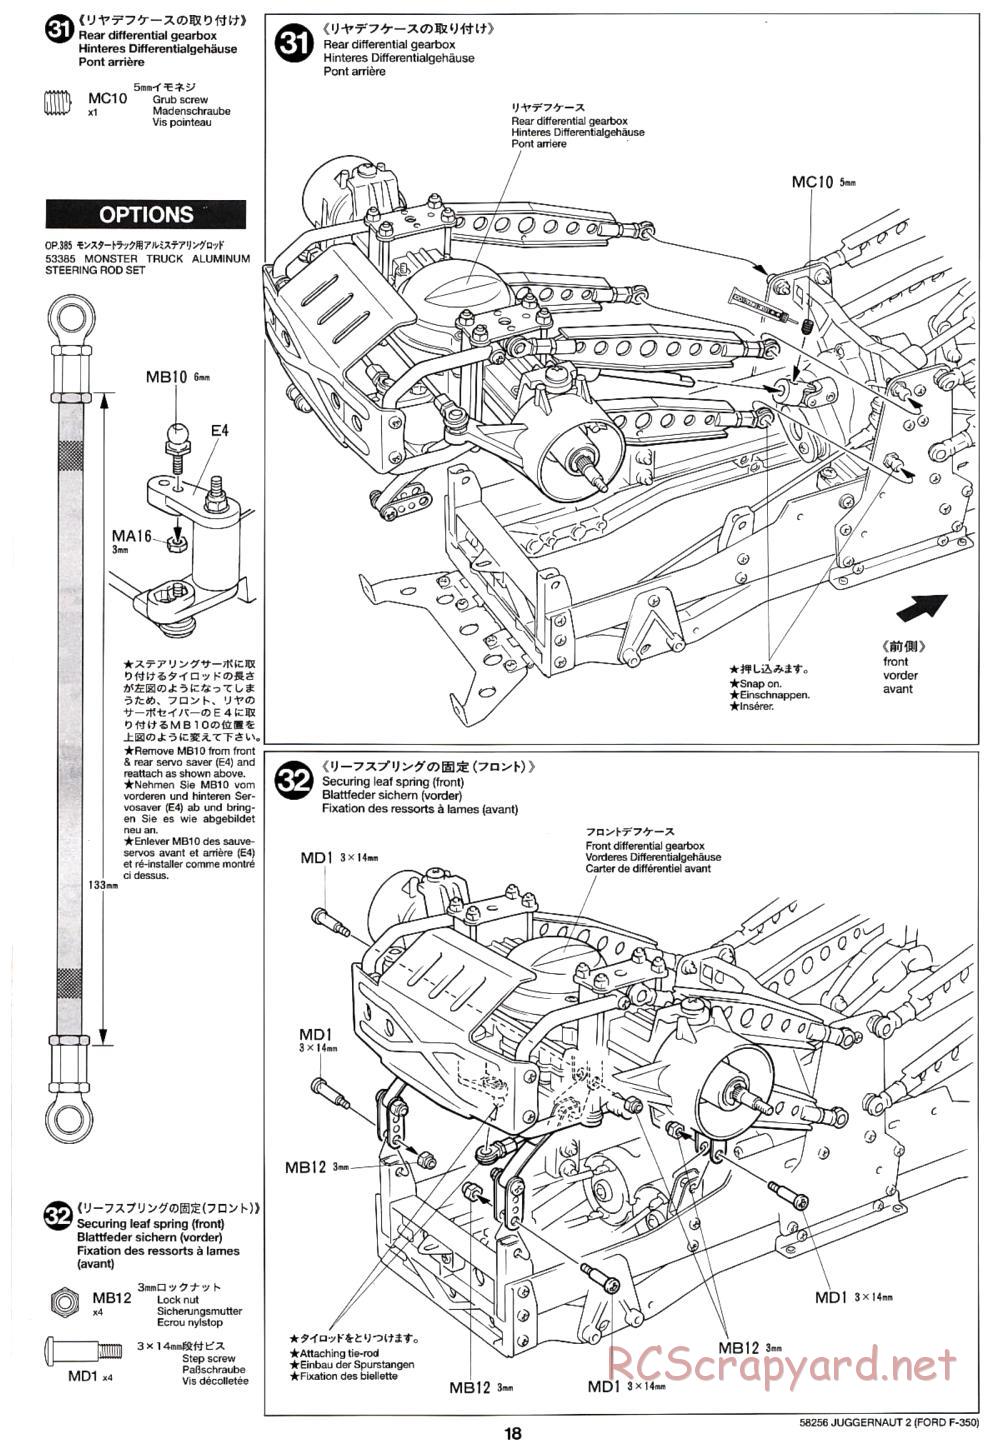 Tamiya - Juggernaut 2 Chassis - Manual - Page 18